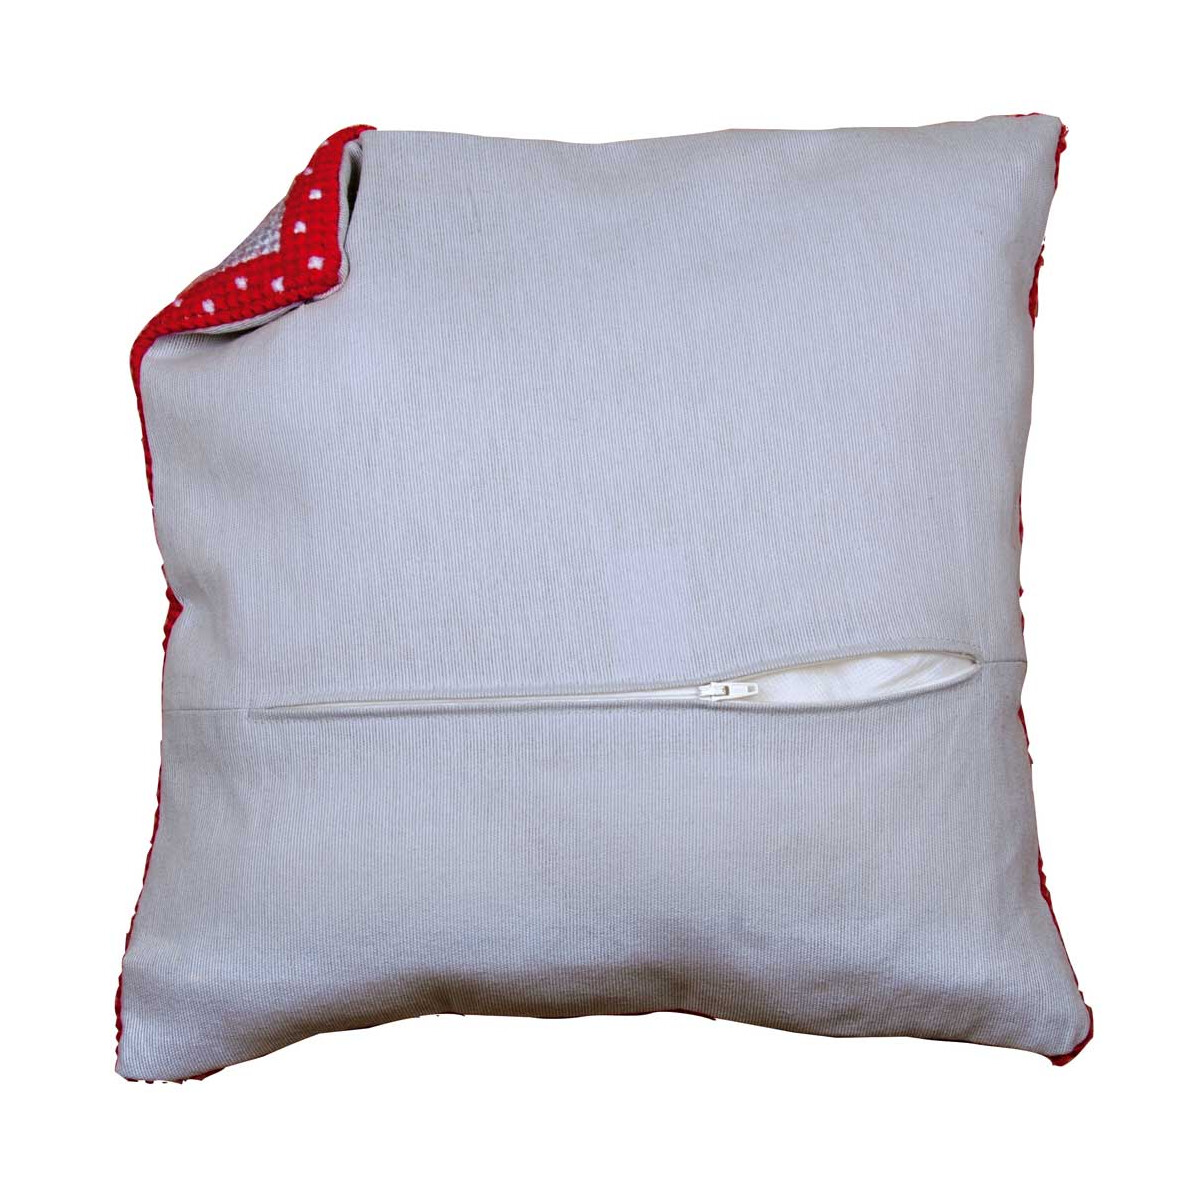 Vervaco Cushion Back with Zipper - Gray, 45 x 45 cm, DIY